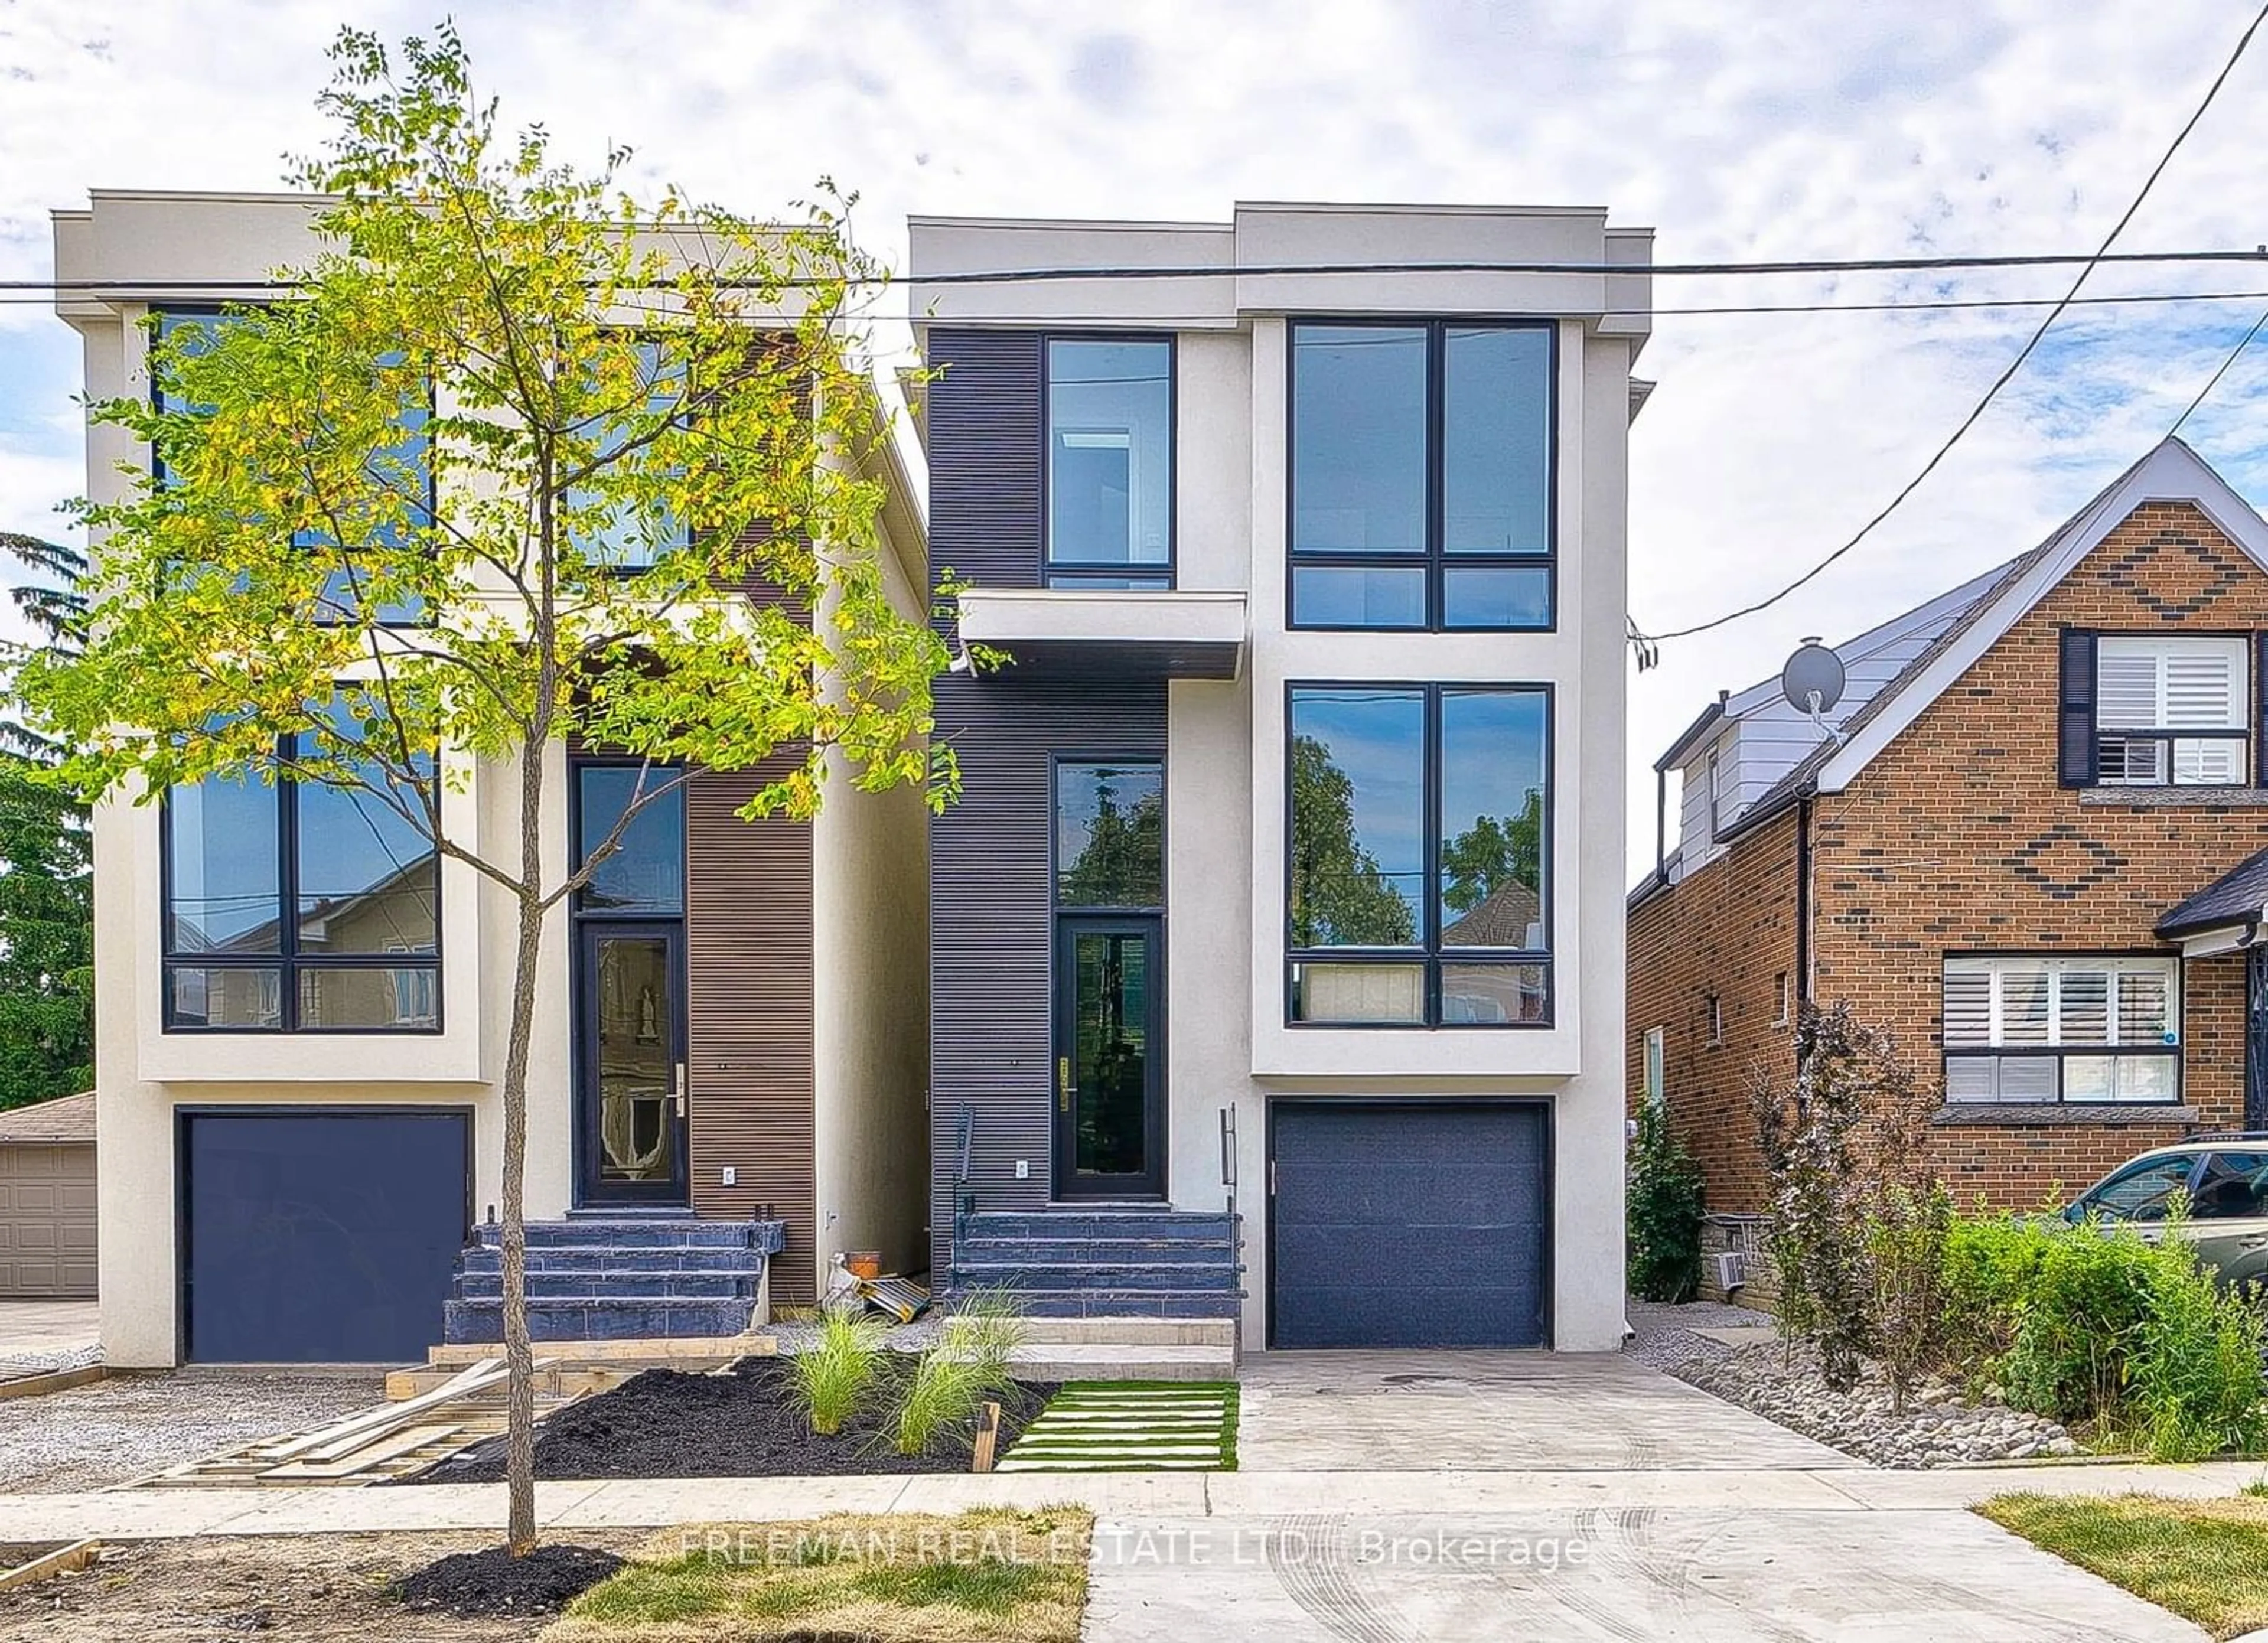 Home with brick exterior material for 683 Glencairn Ave, Toronto Ontario M6B 1Z8